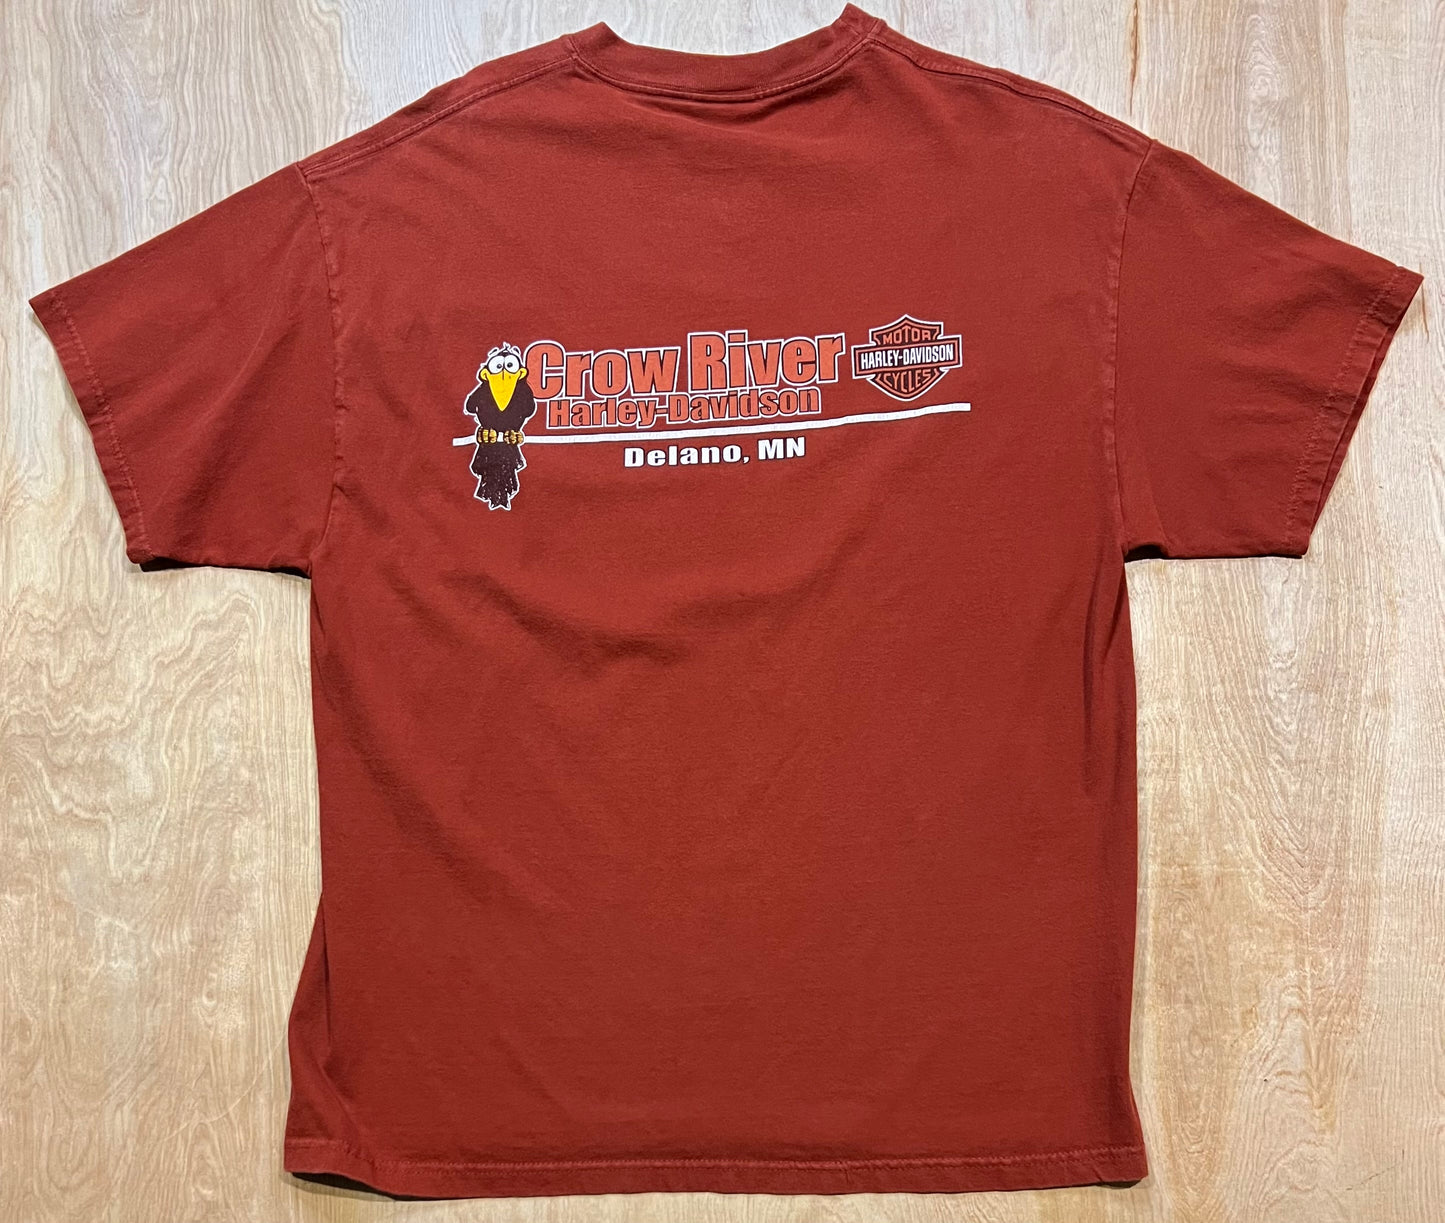 Harley Davidson "Trust Me It's Big" Crow River T-Shirt